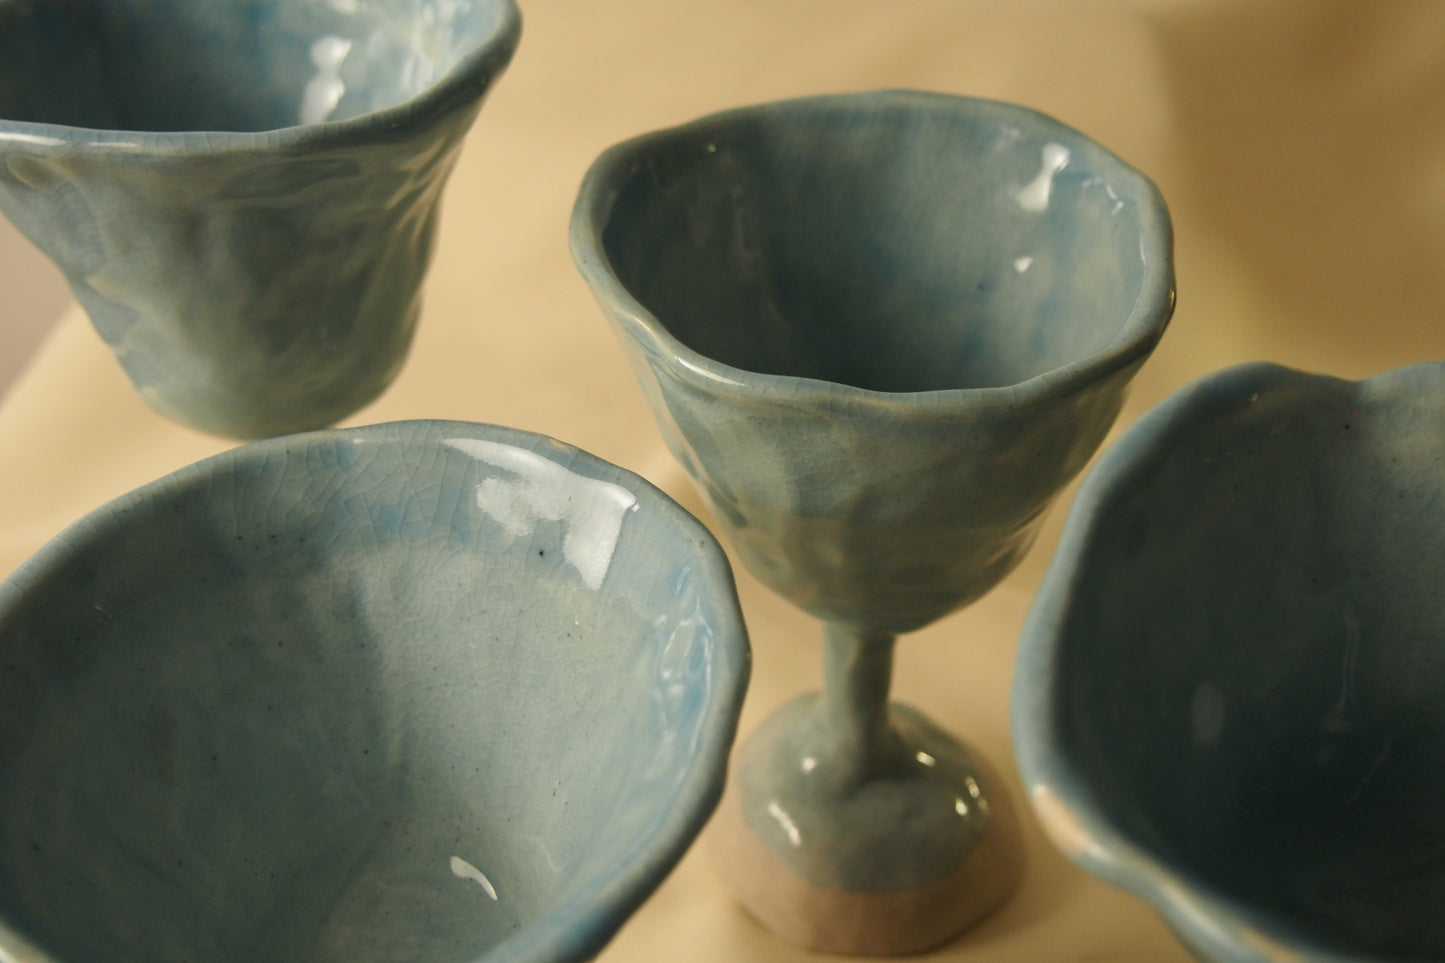 Lily IV,  Ceramic Wine Glass